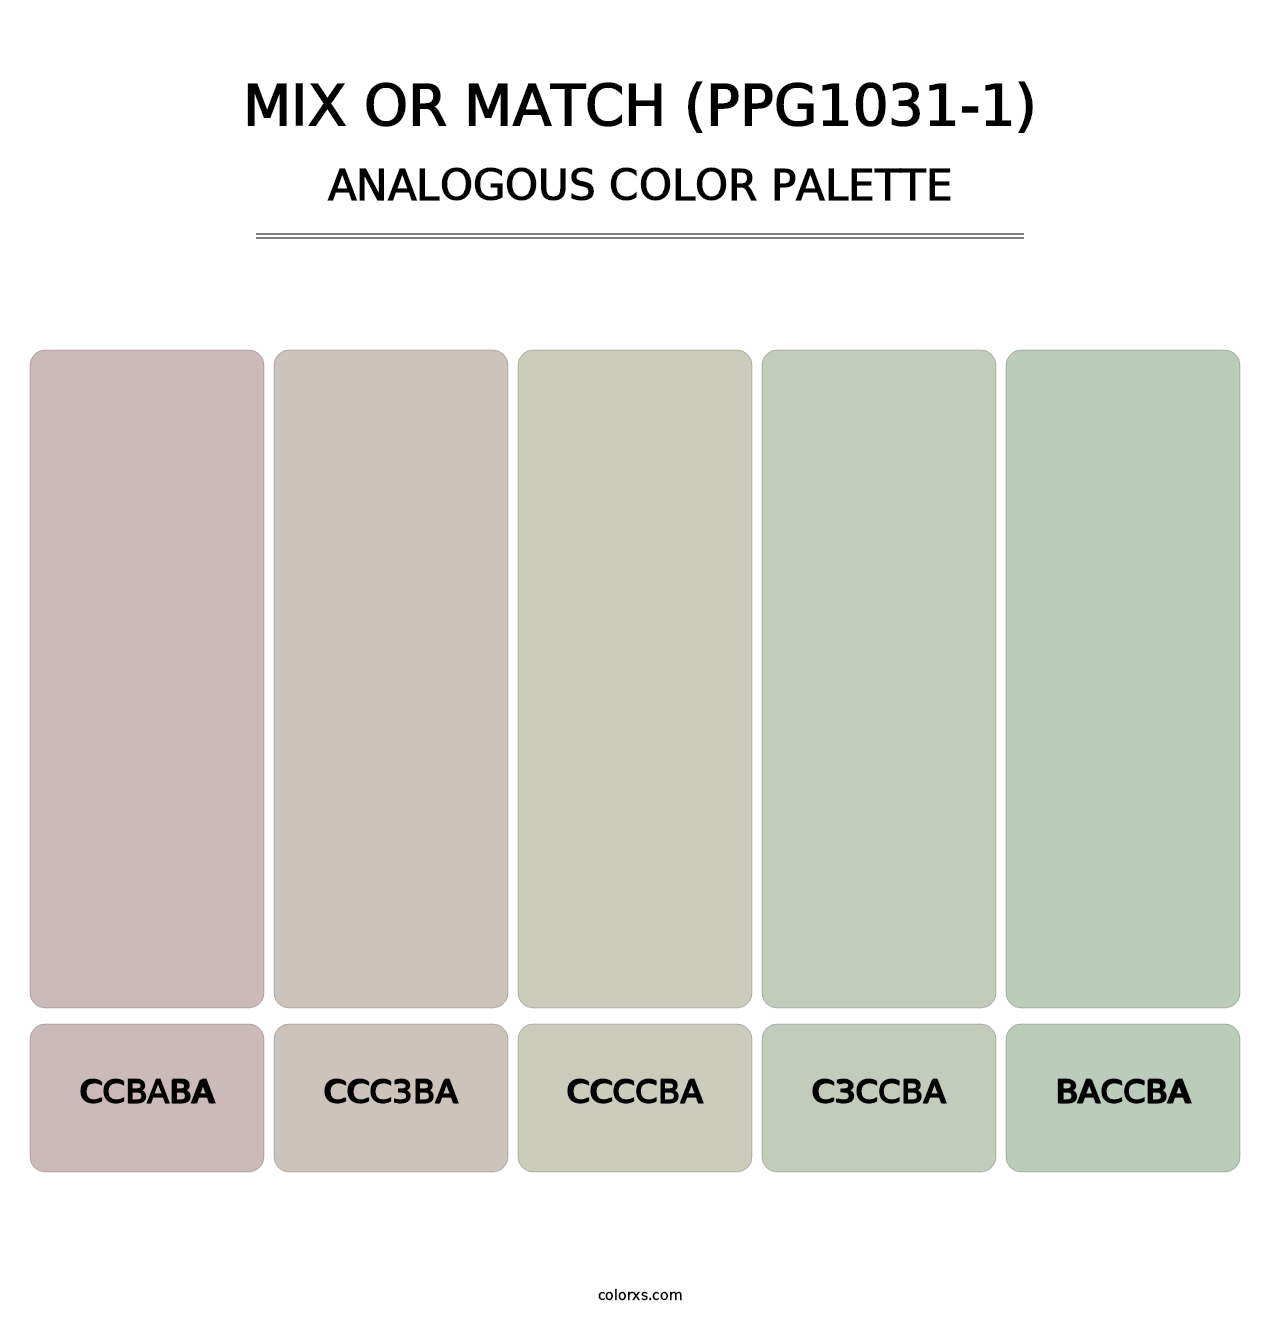 Mix Or Match (PPG1031-1) - Analogous Color Palette